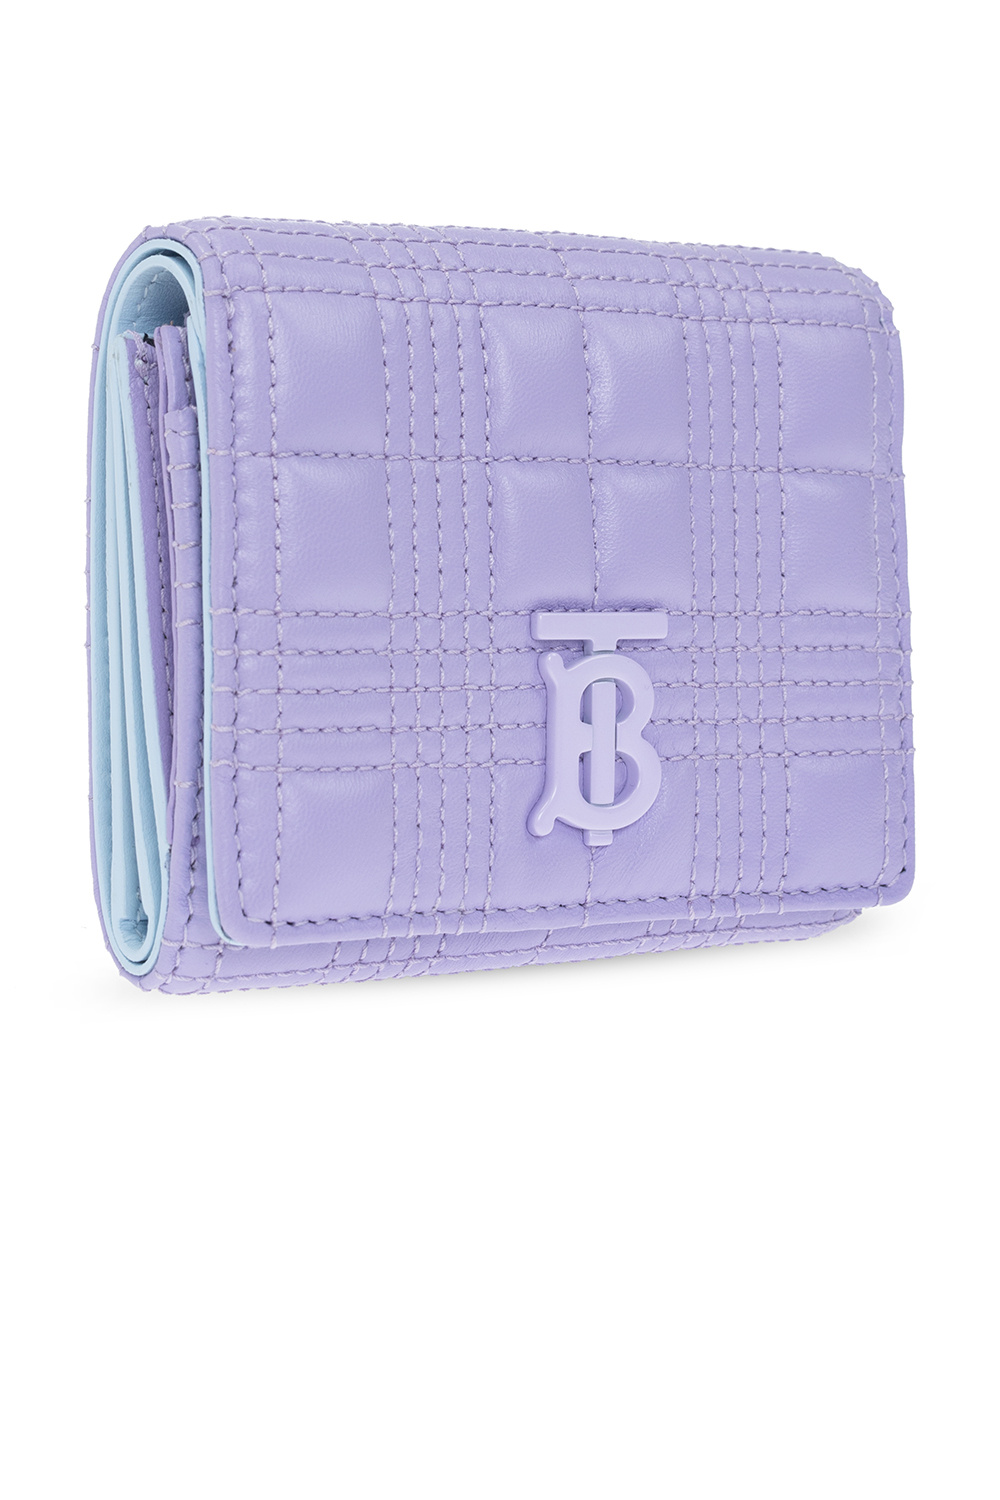 Burberry ‘Lola’ bi-fold wallet